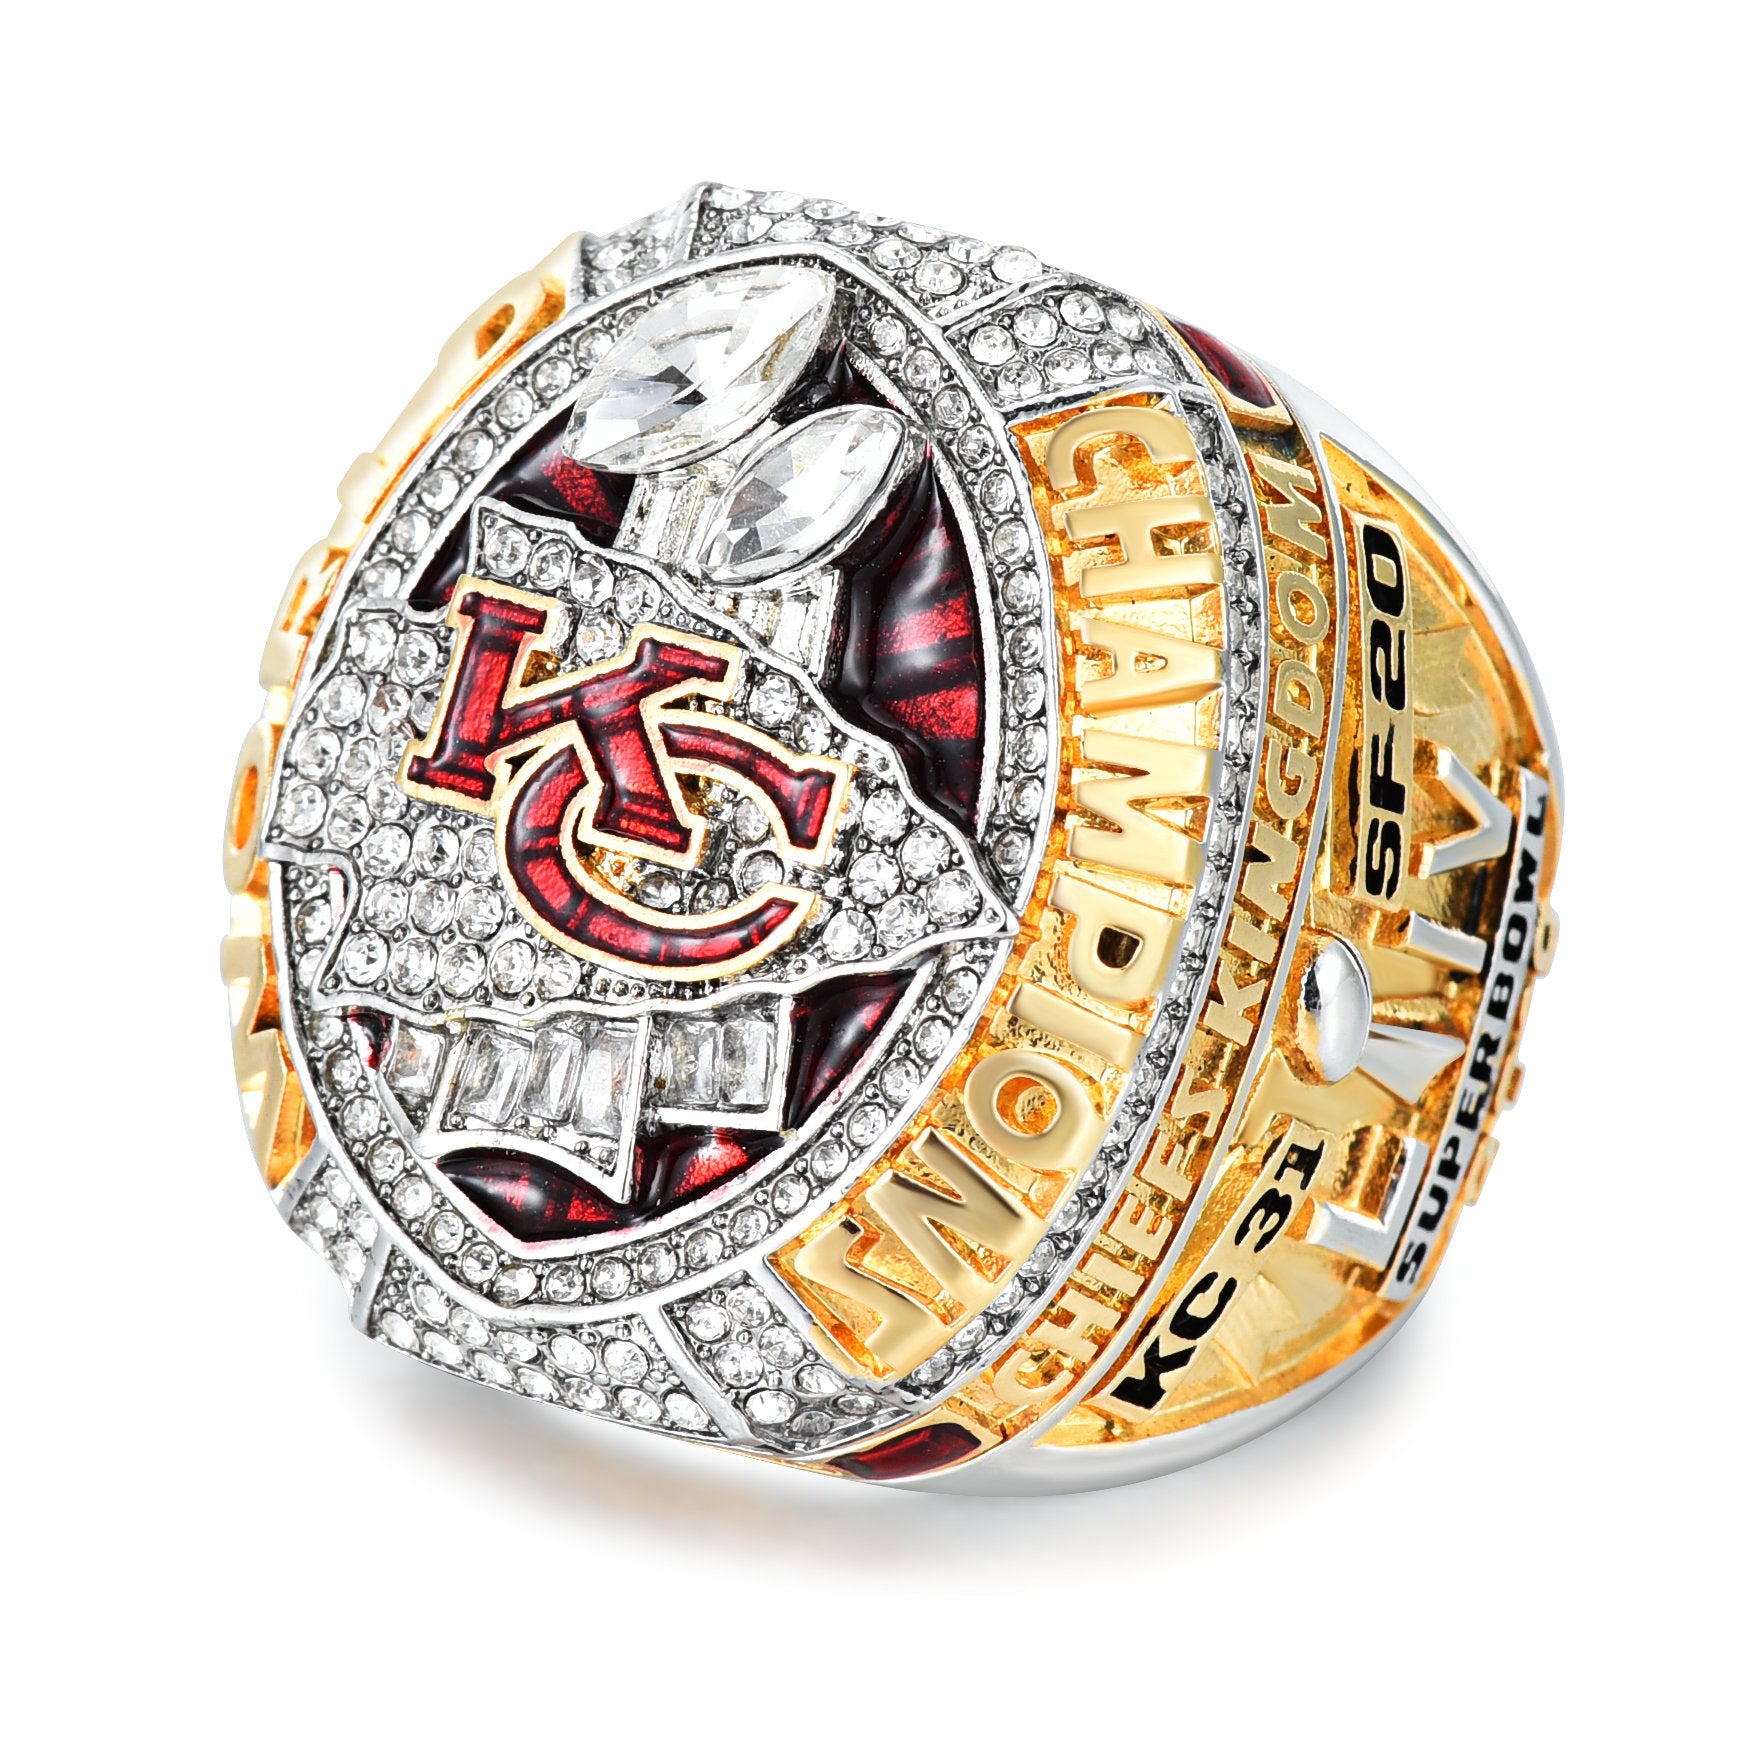 Chiefs unveil new Super Bowl rings